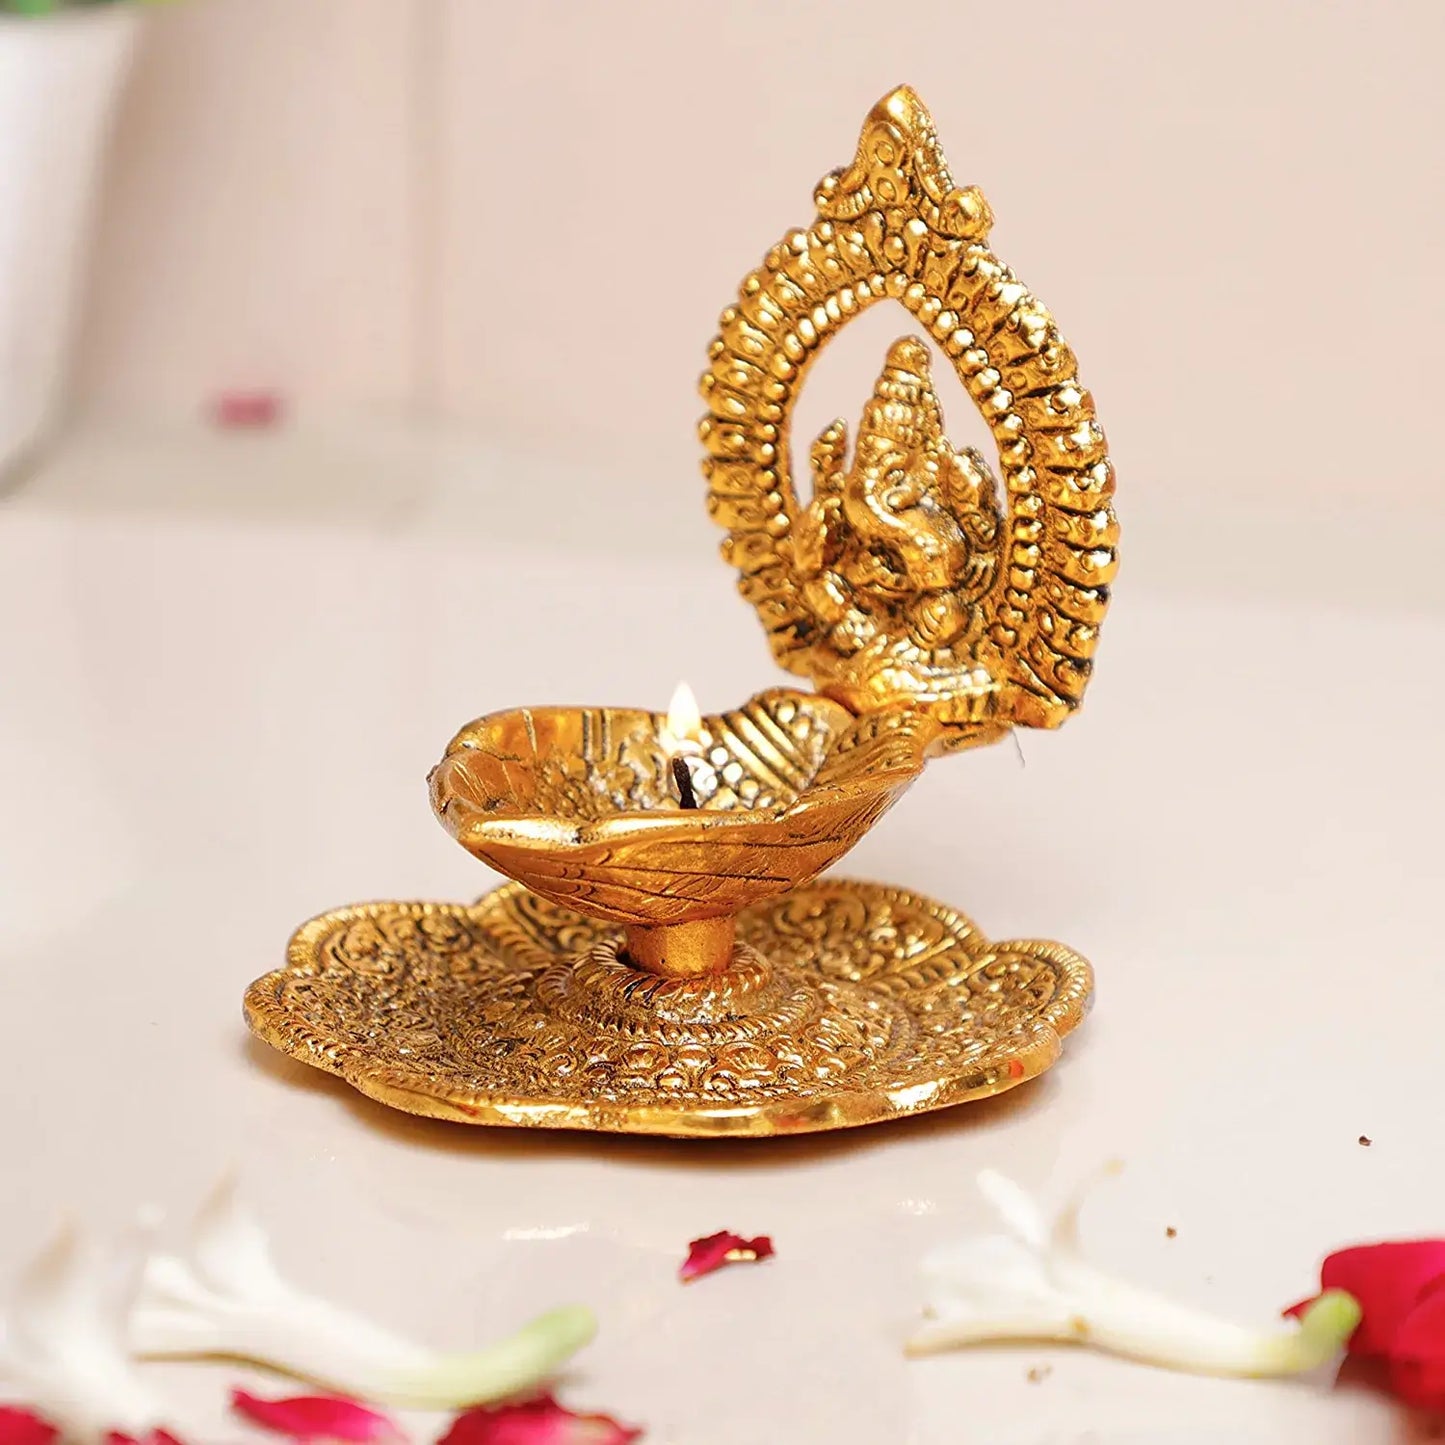 Aluminium Metal Ganesh Diya with Swastik Engraved in Hand Hath Deepak Ganesh Gold Plated